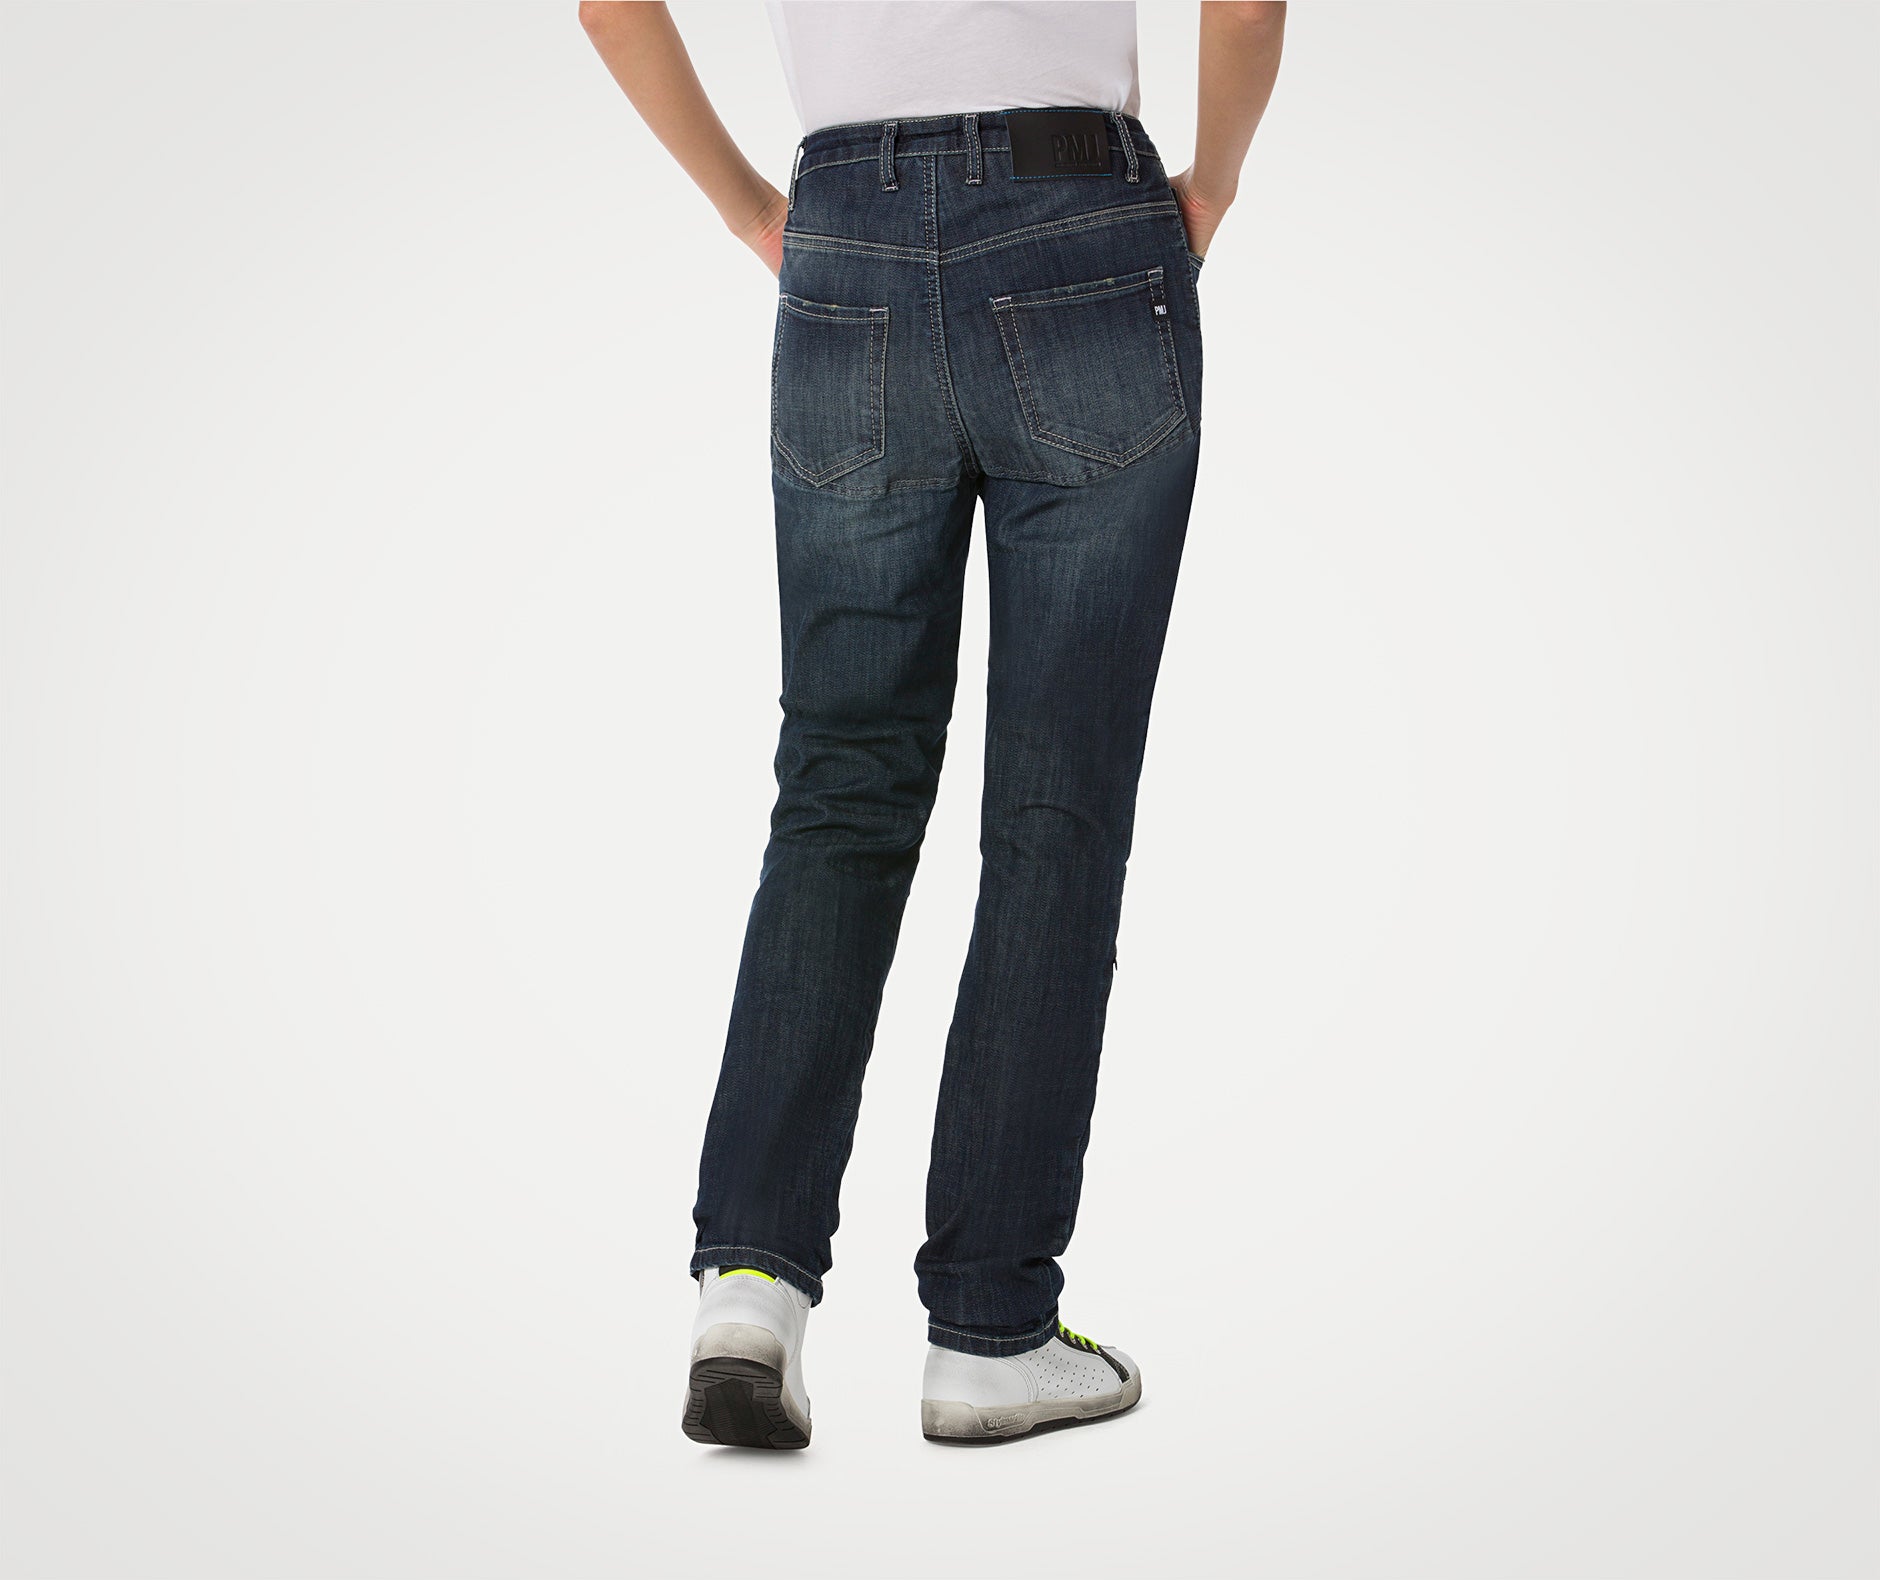 Jeany - 12,5oz denim jeans fabric - Black